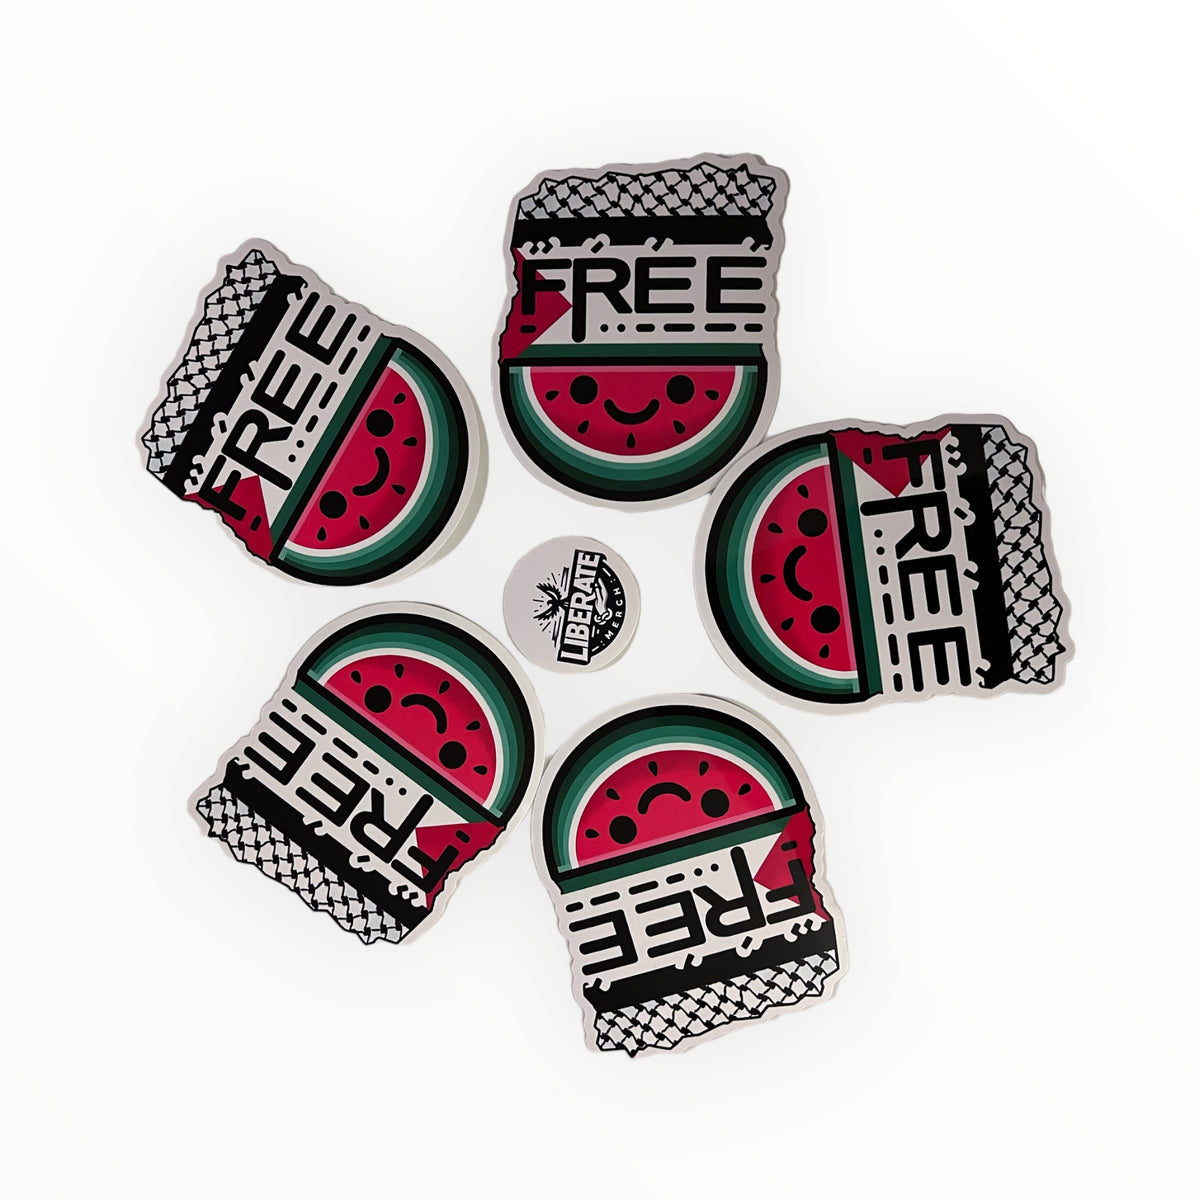 Bundle of 5 Free Palestine stickers